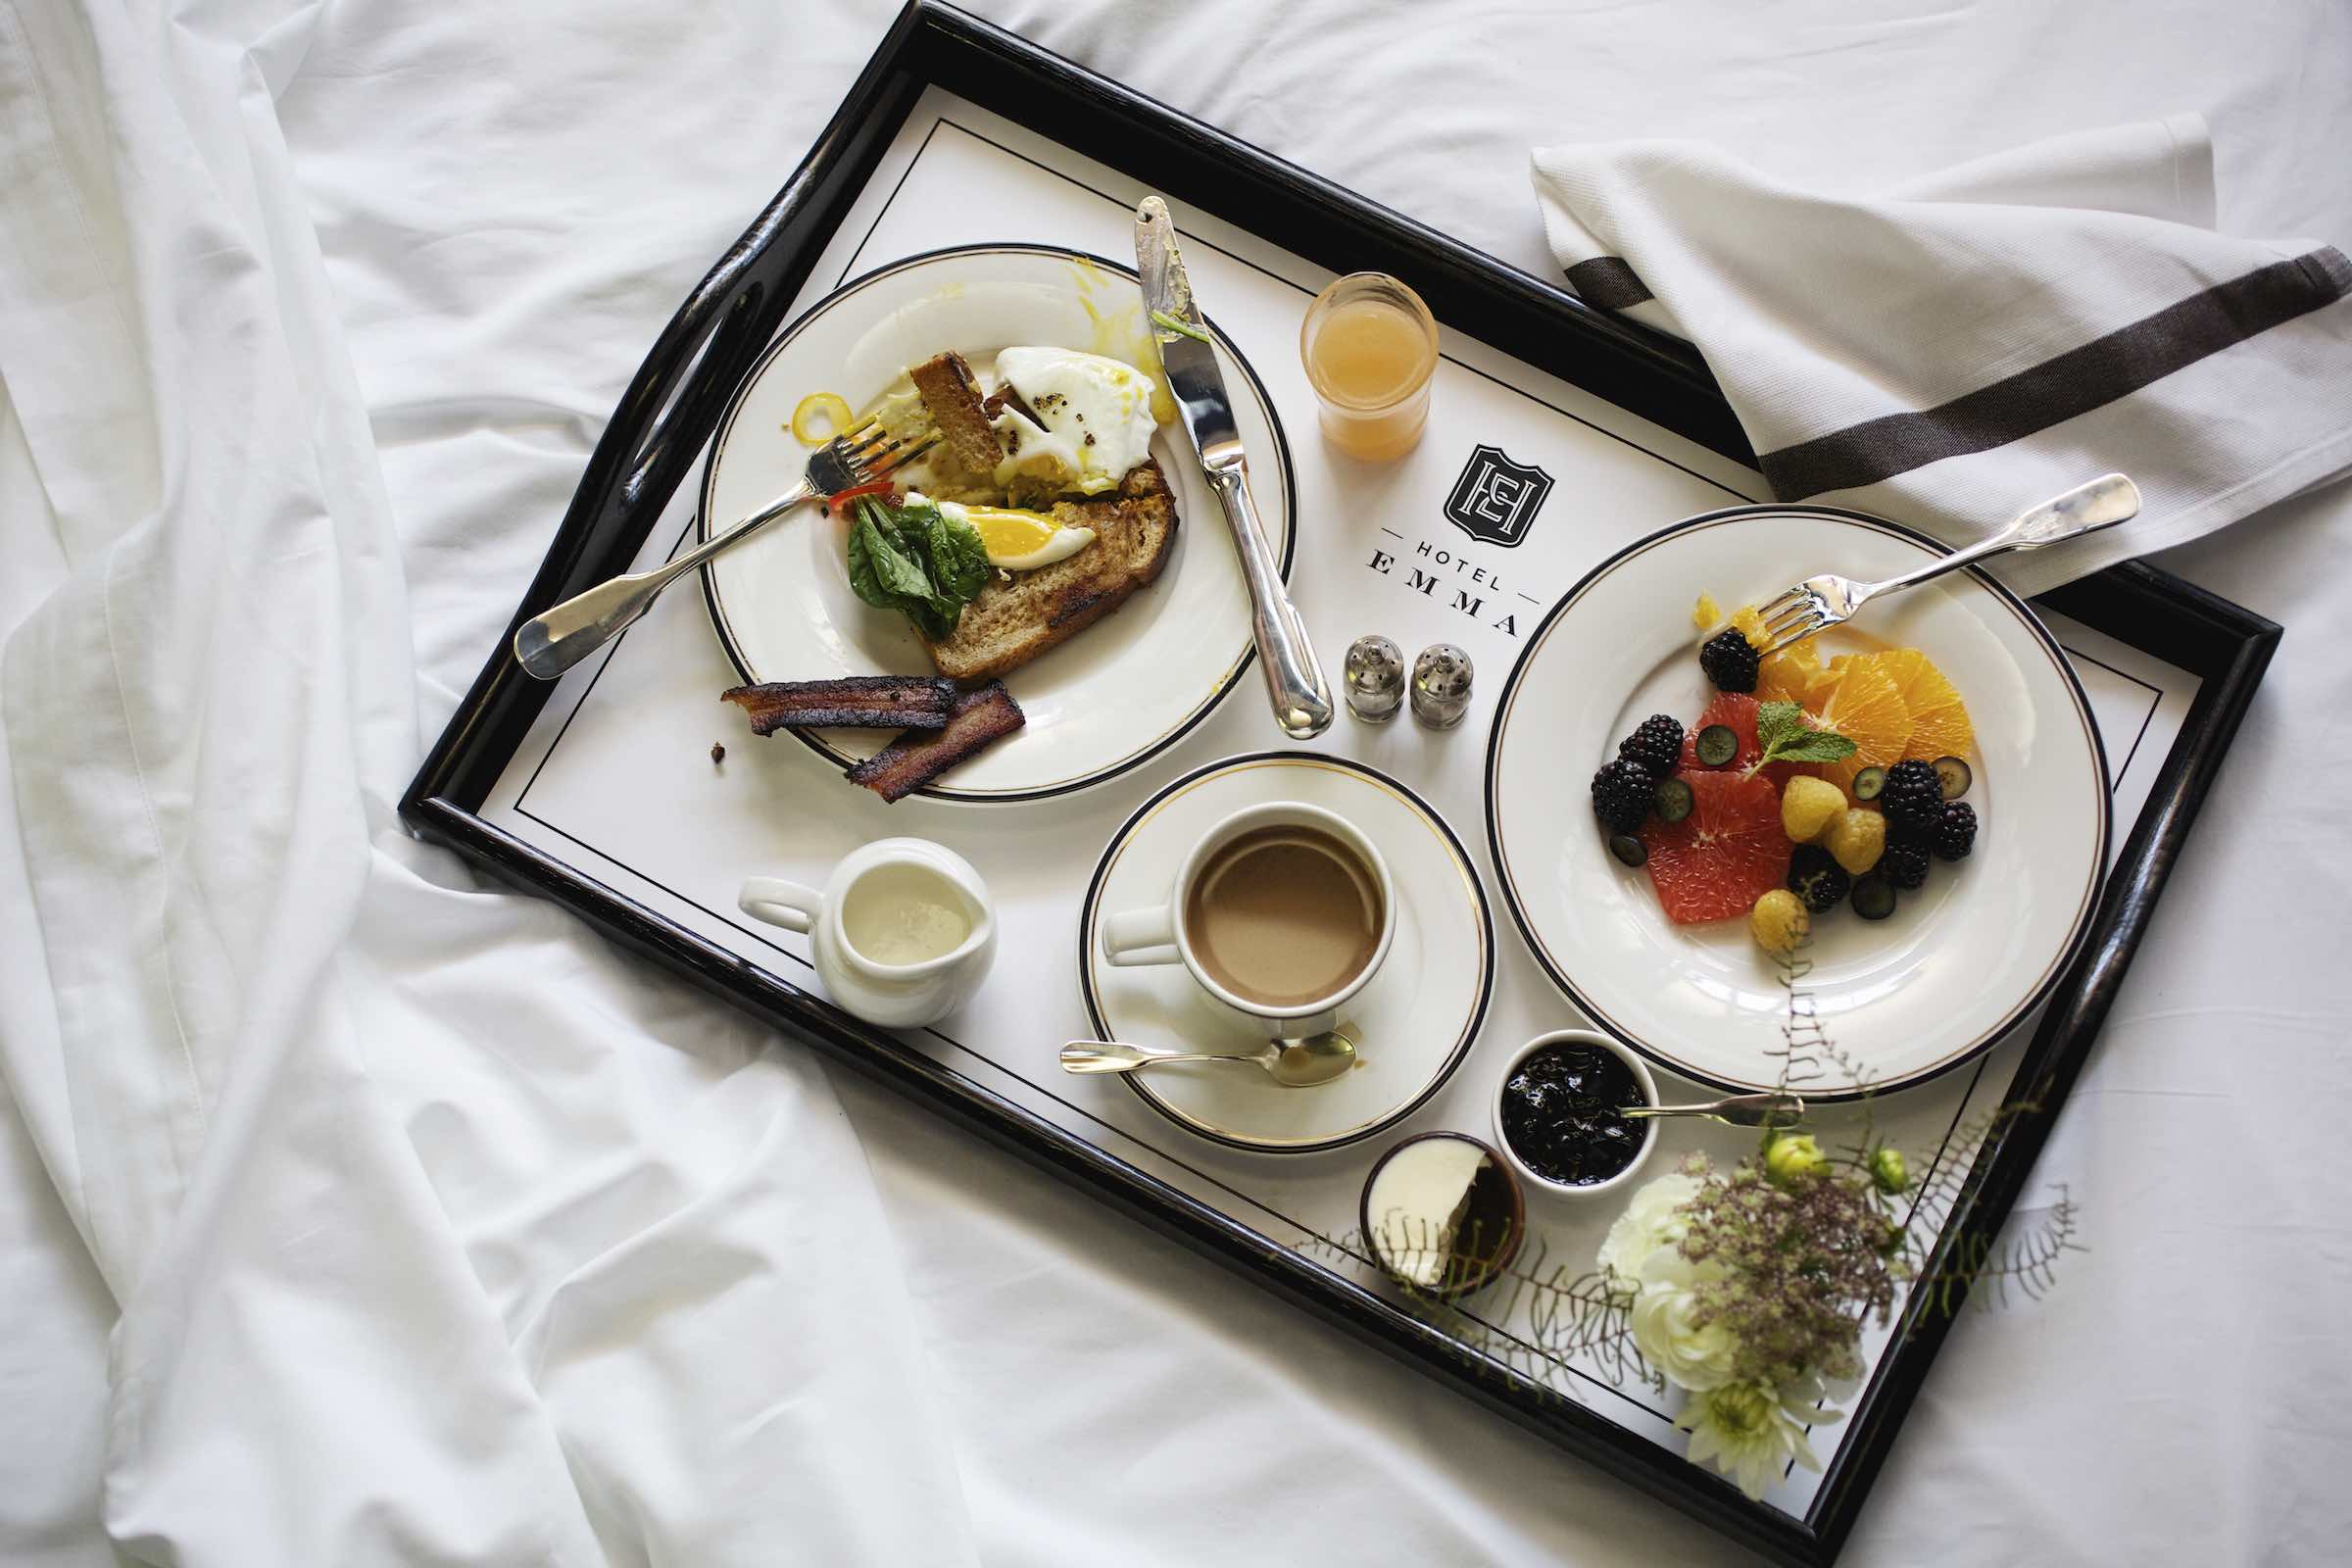 Jody Horton Photography - Room service breakfast spread served on white bedding. 